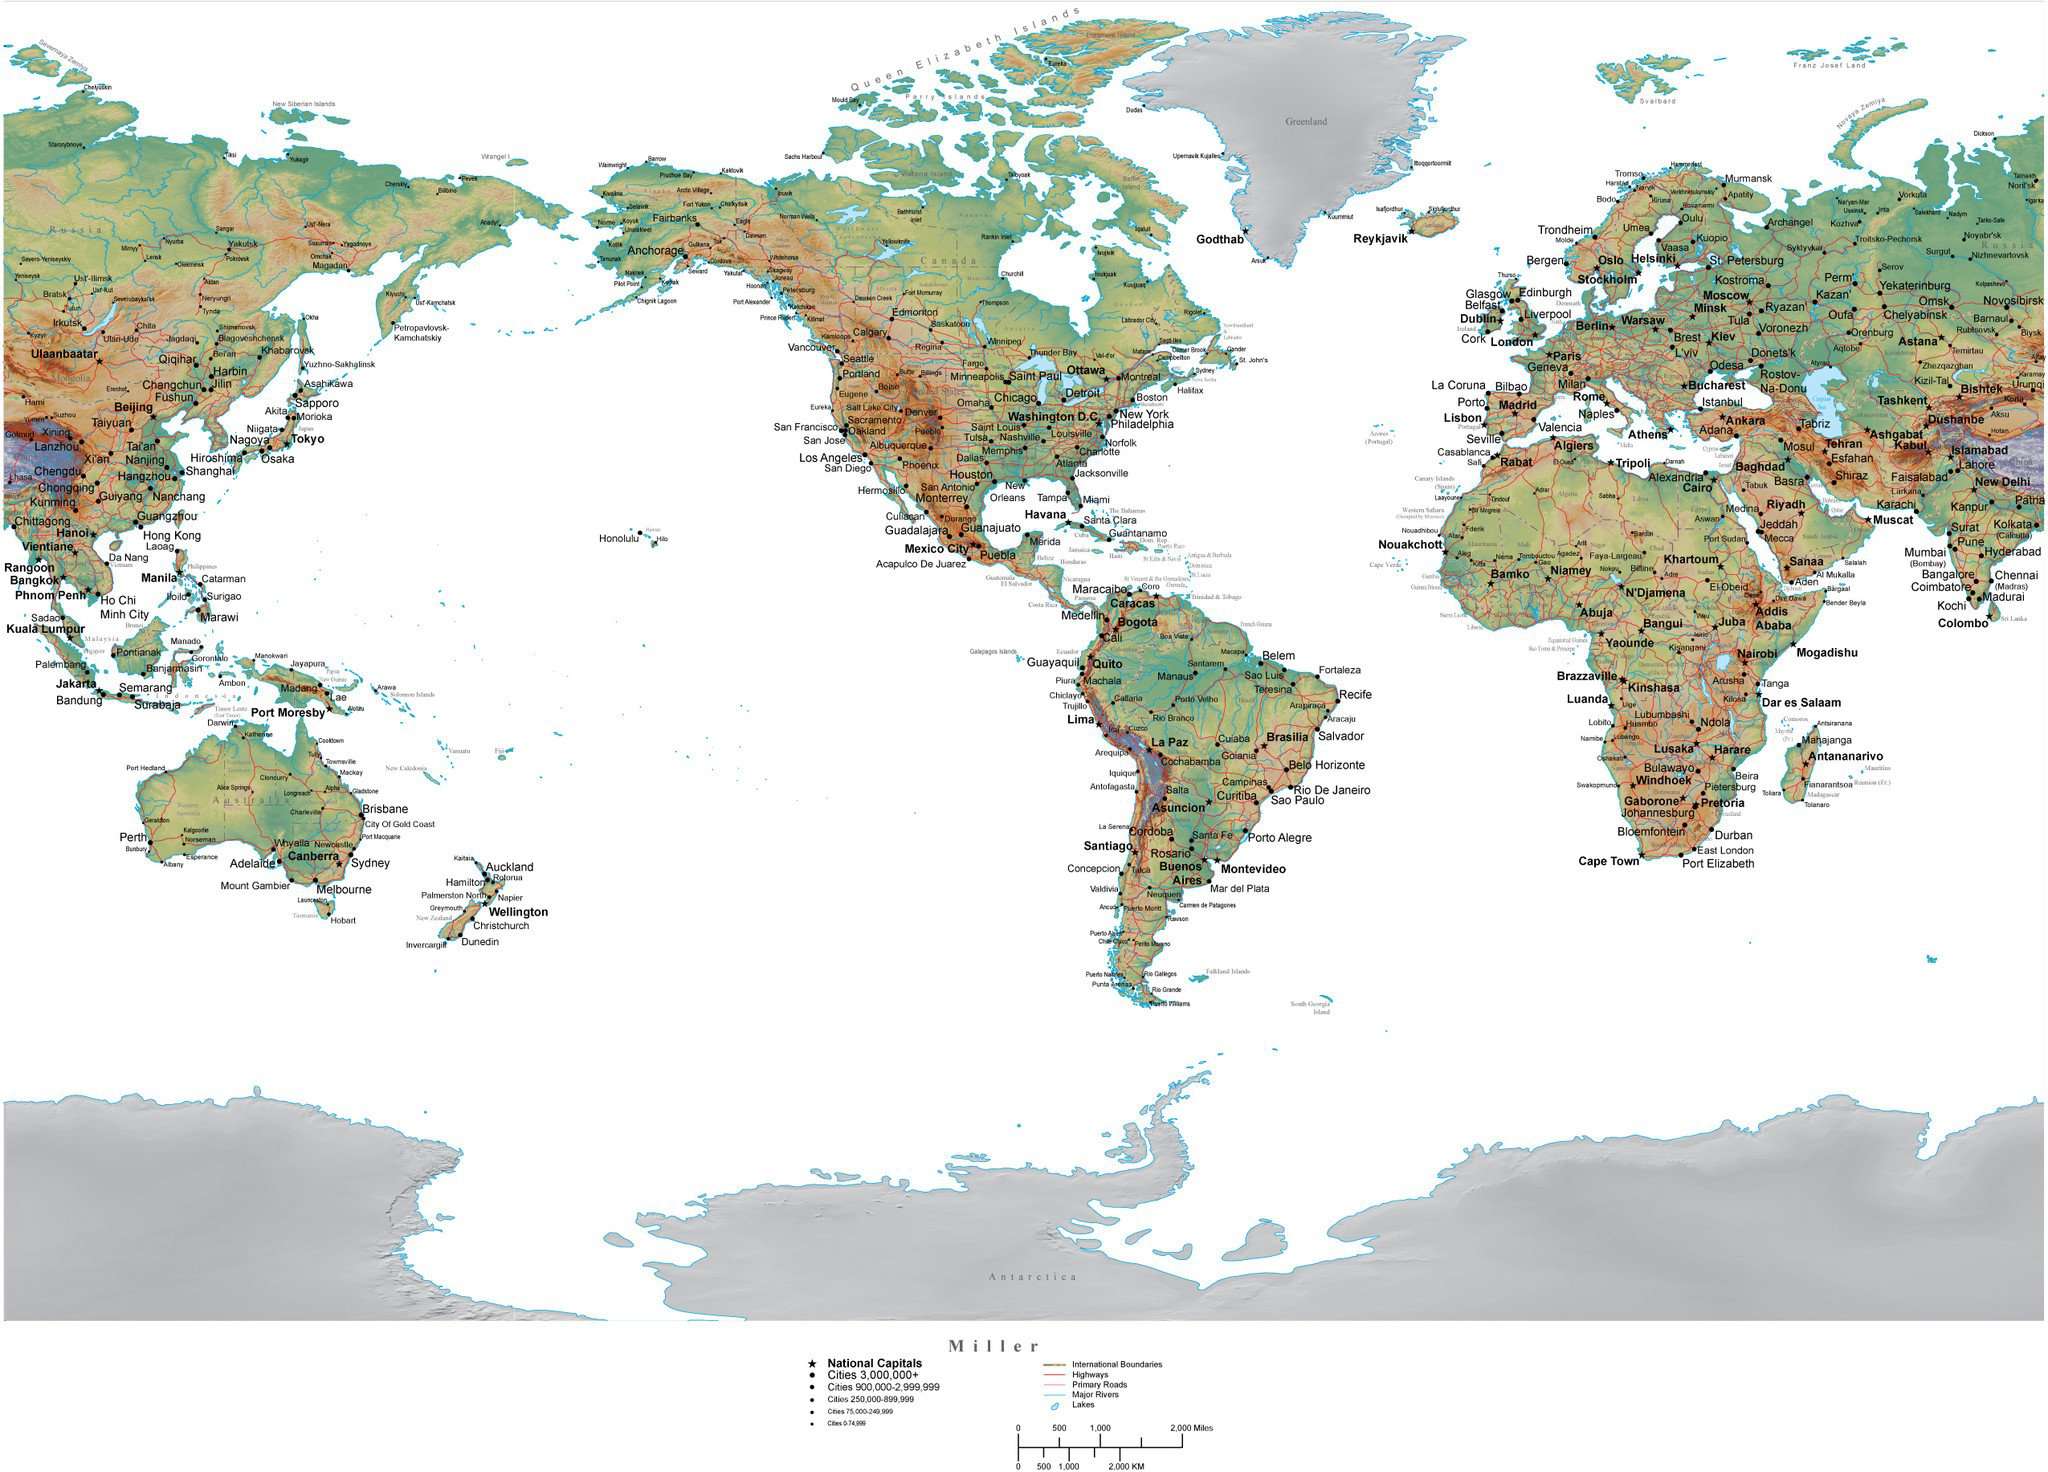 Digital Miller World Terrain Map In Adobe Illustrator Vector Format With Terrain Miller 545328 4891